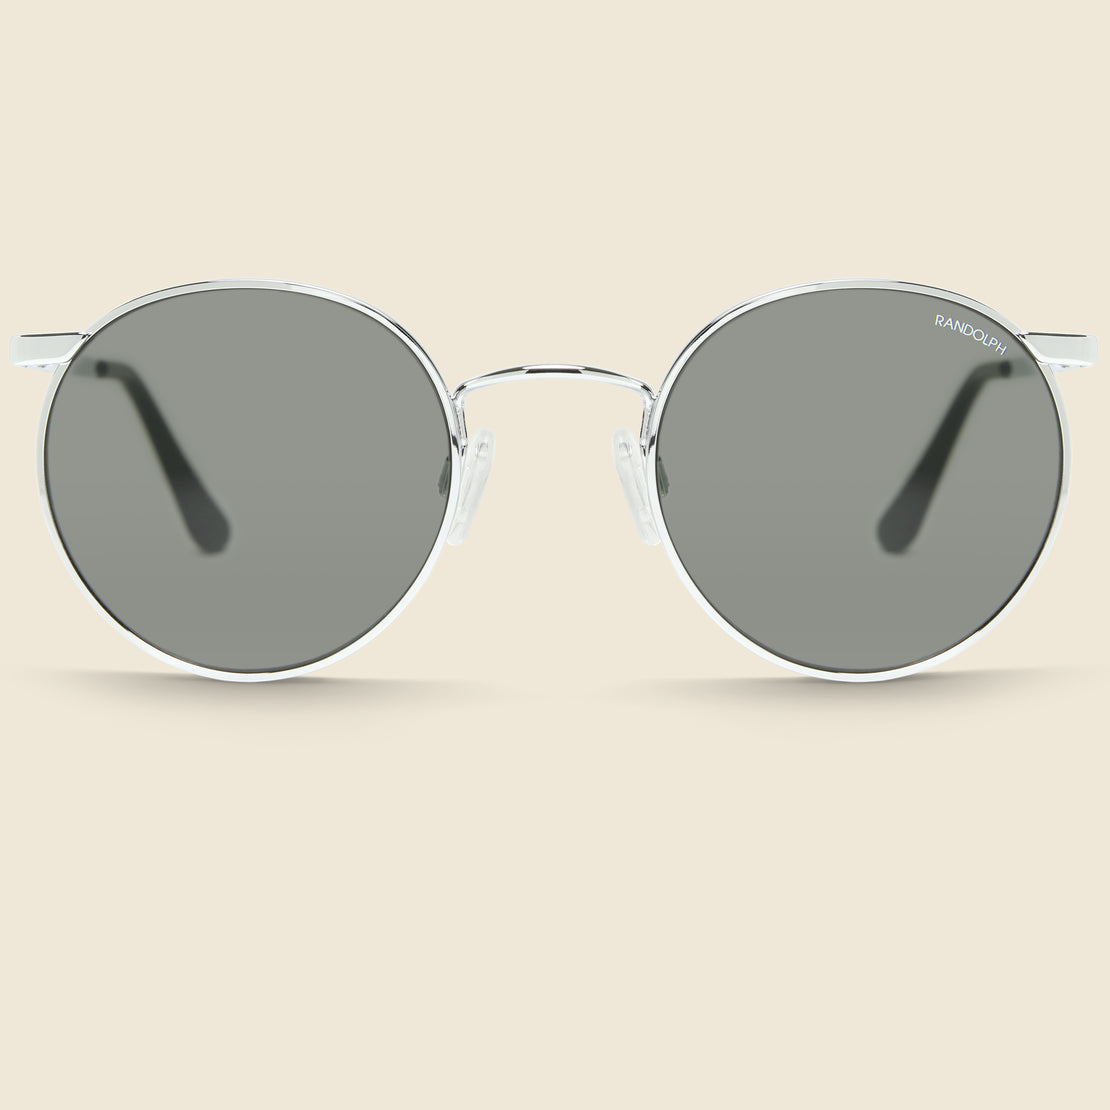 Randolph Engineering P3 Sunglasses - American Gray/Bright Chrome